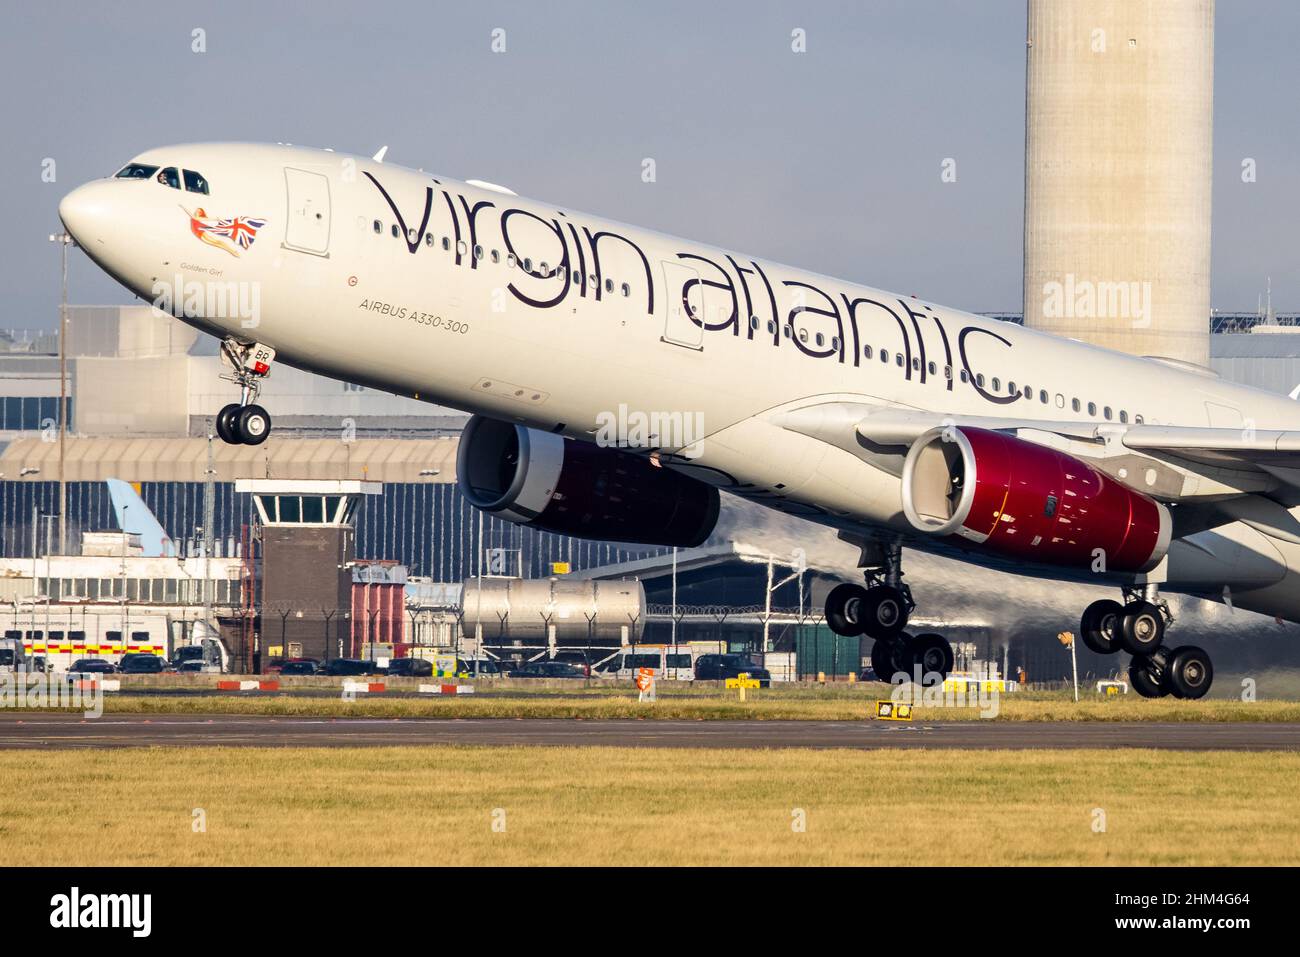 Despegue de Virgin Atlantic Foto de stock